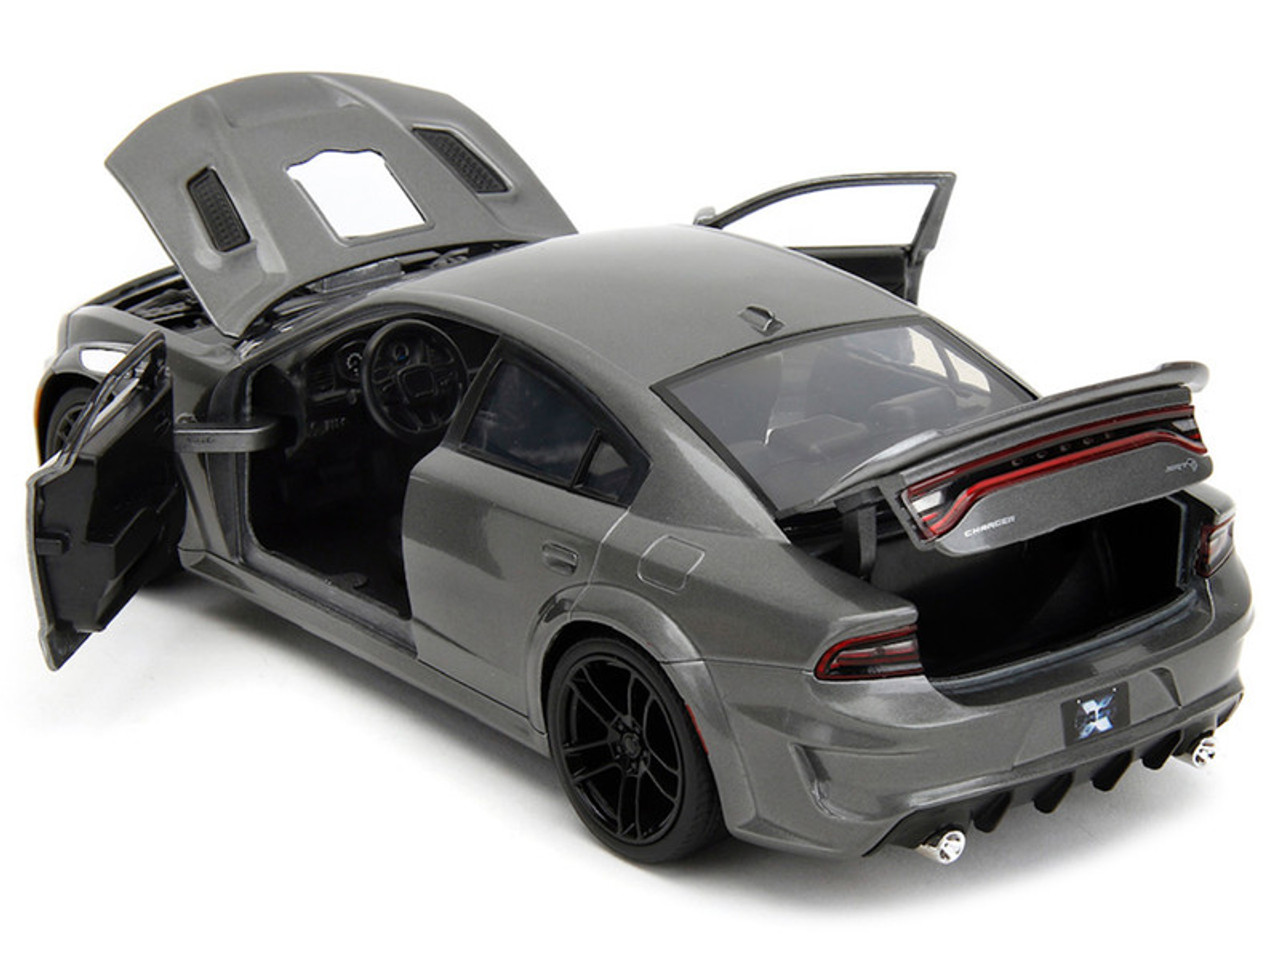 2021 Dodge Charger SRT Hellcat Gray Metallic "Fast X" (2023) Movie "Fast & Furious" Series 1/24 Diecast Model Car by Jada